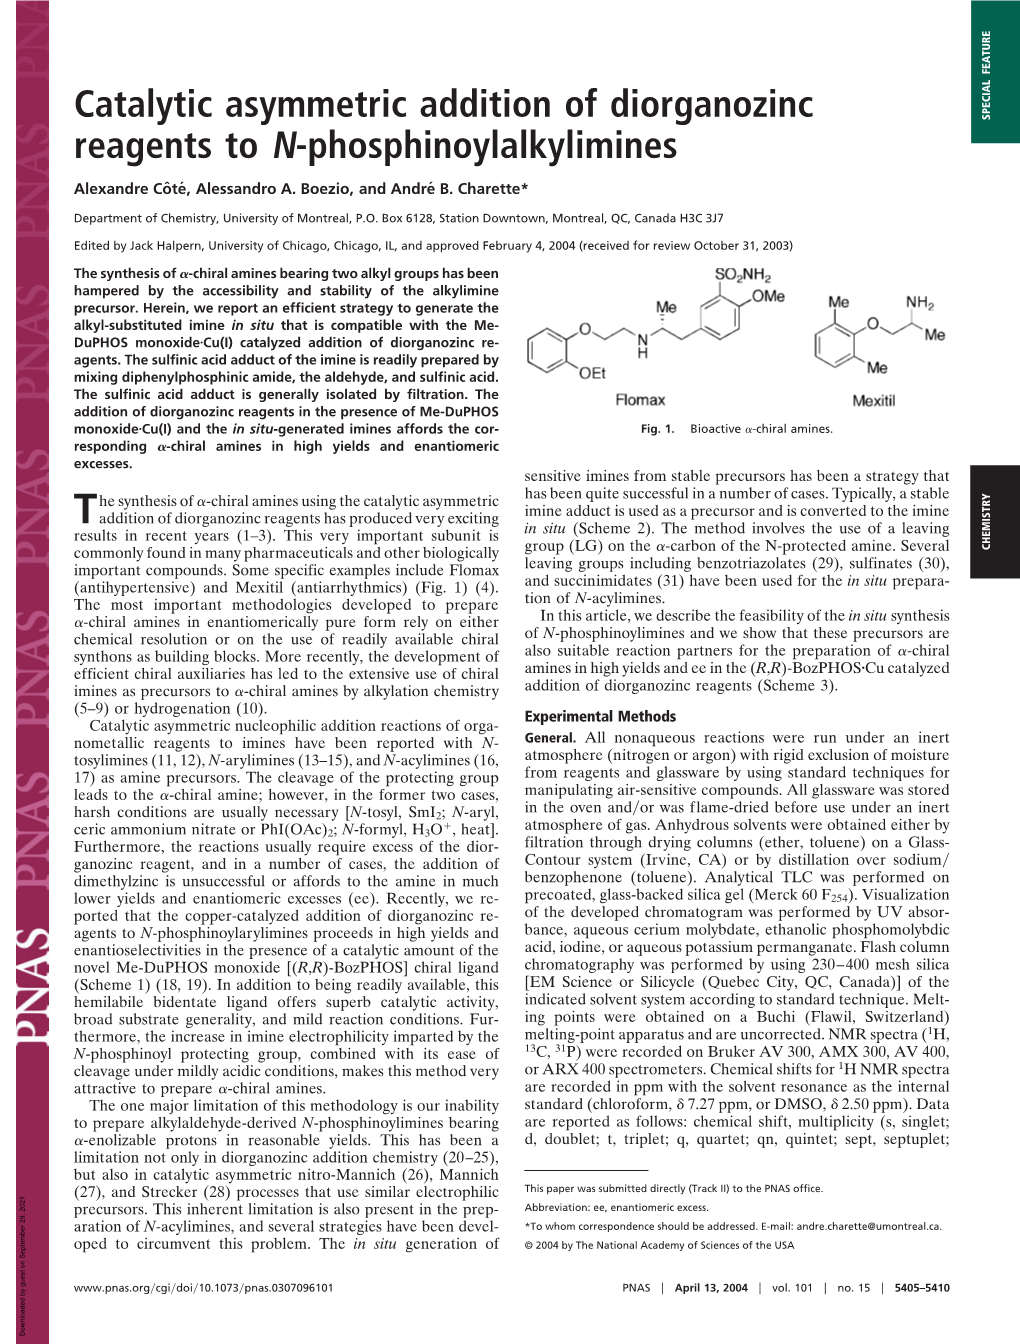 Catalytic Asymmetric Addition of Diorganozinc Reagents to N